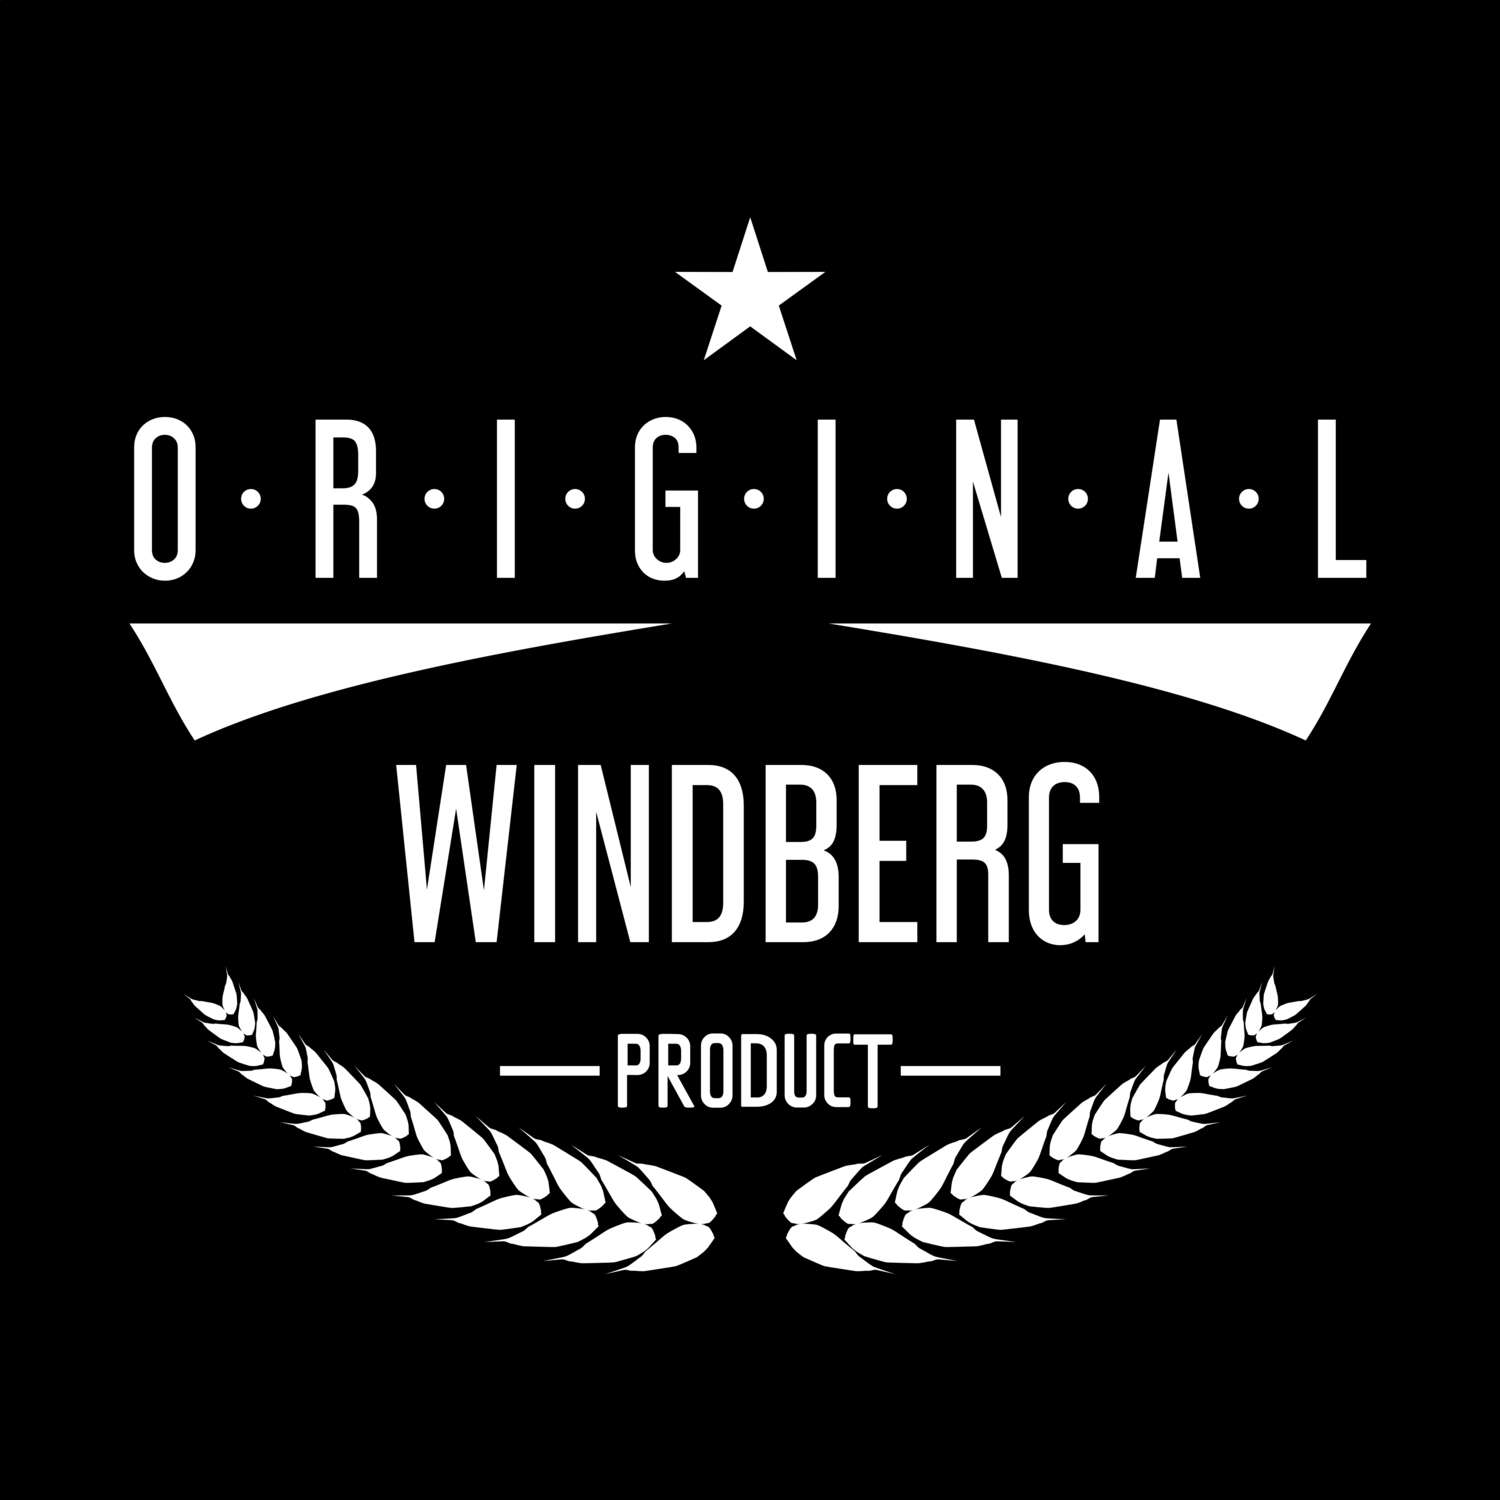 Windberg T-Shirt »Original Product«